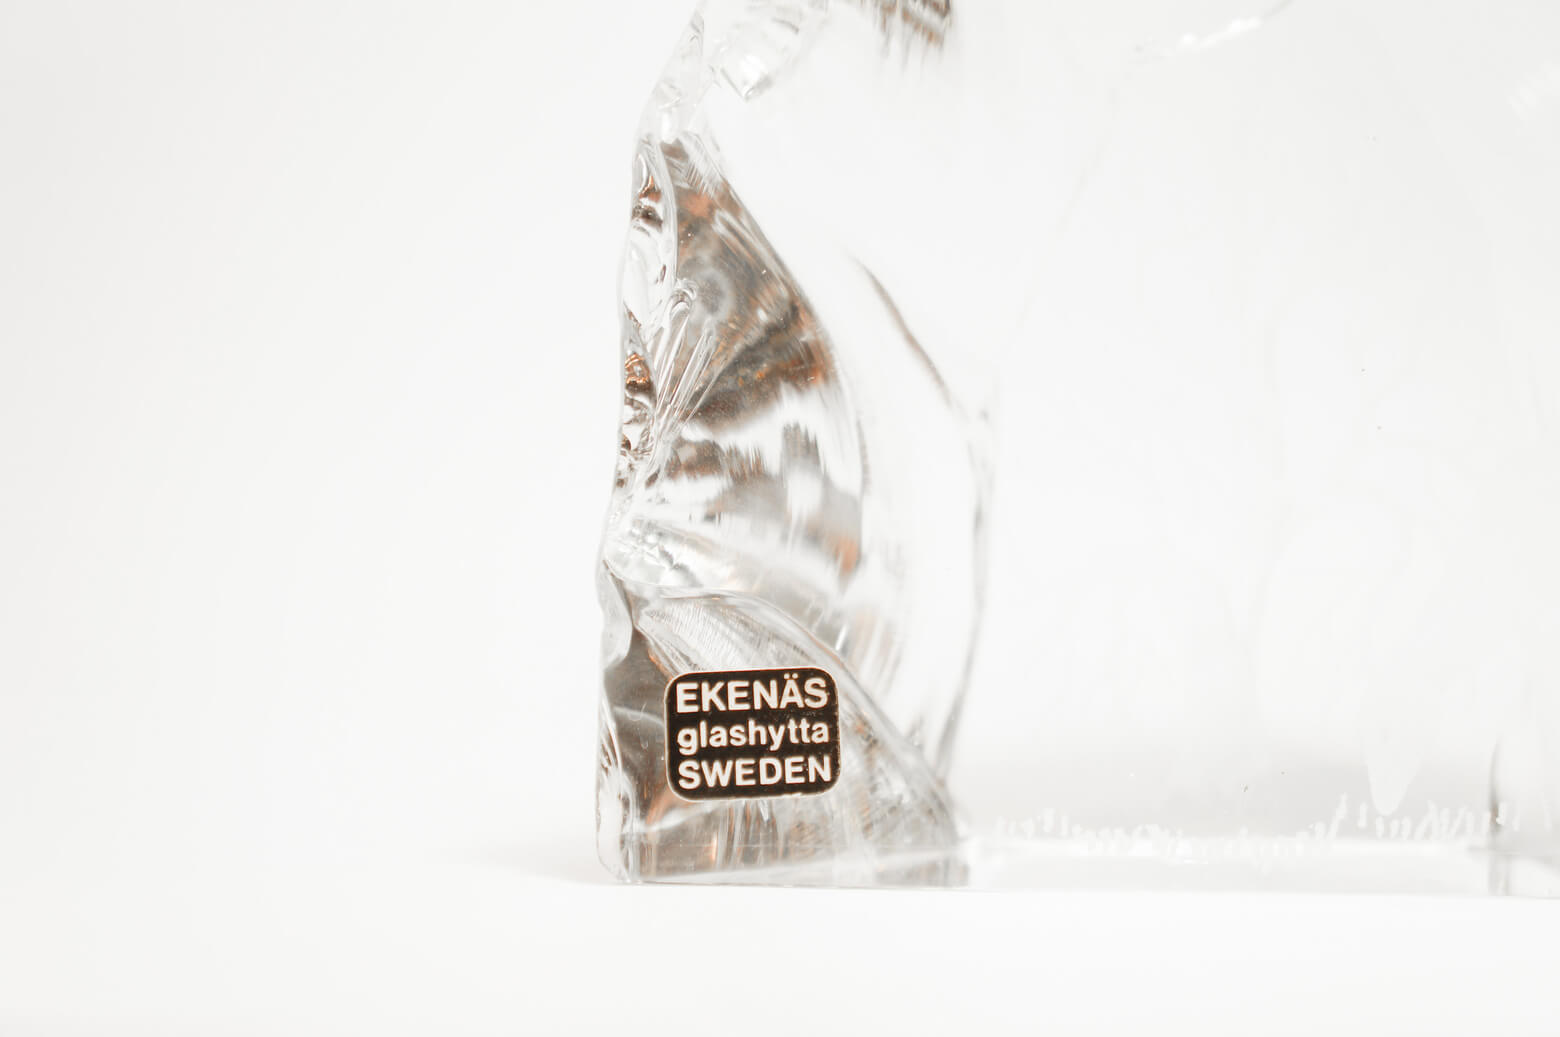 Ekenas Glashytta Glass Object Deer Tony Racov/ガラス オブジェ 鹿 スウェーデン 北欧雑貨 ヴィンテージ